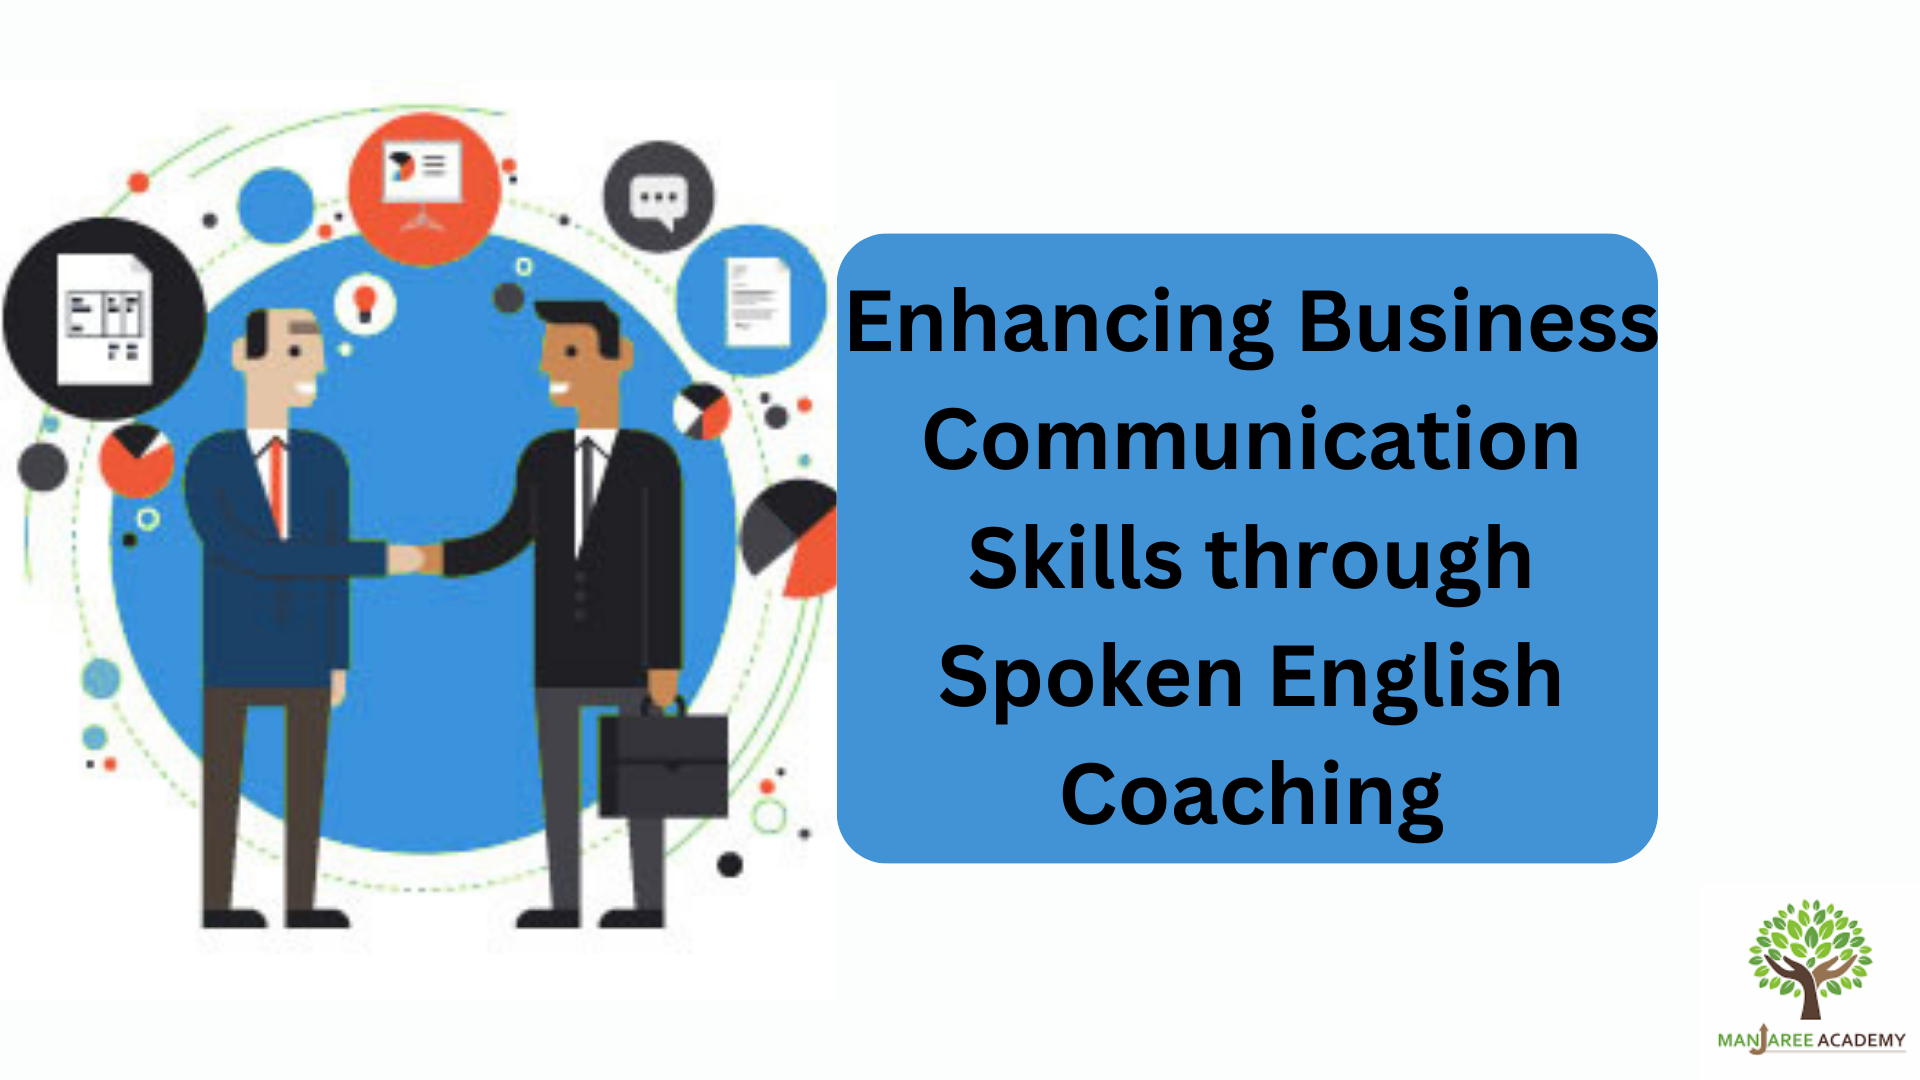 Enhancing Business Communication Skills through Spoken English Coaching